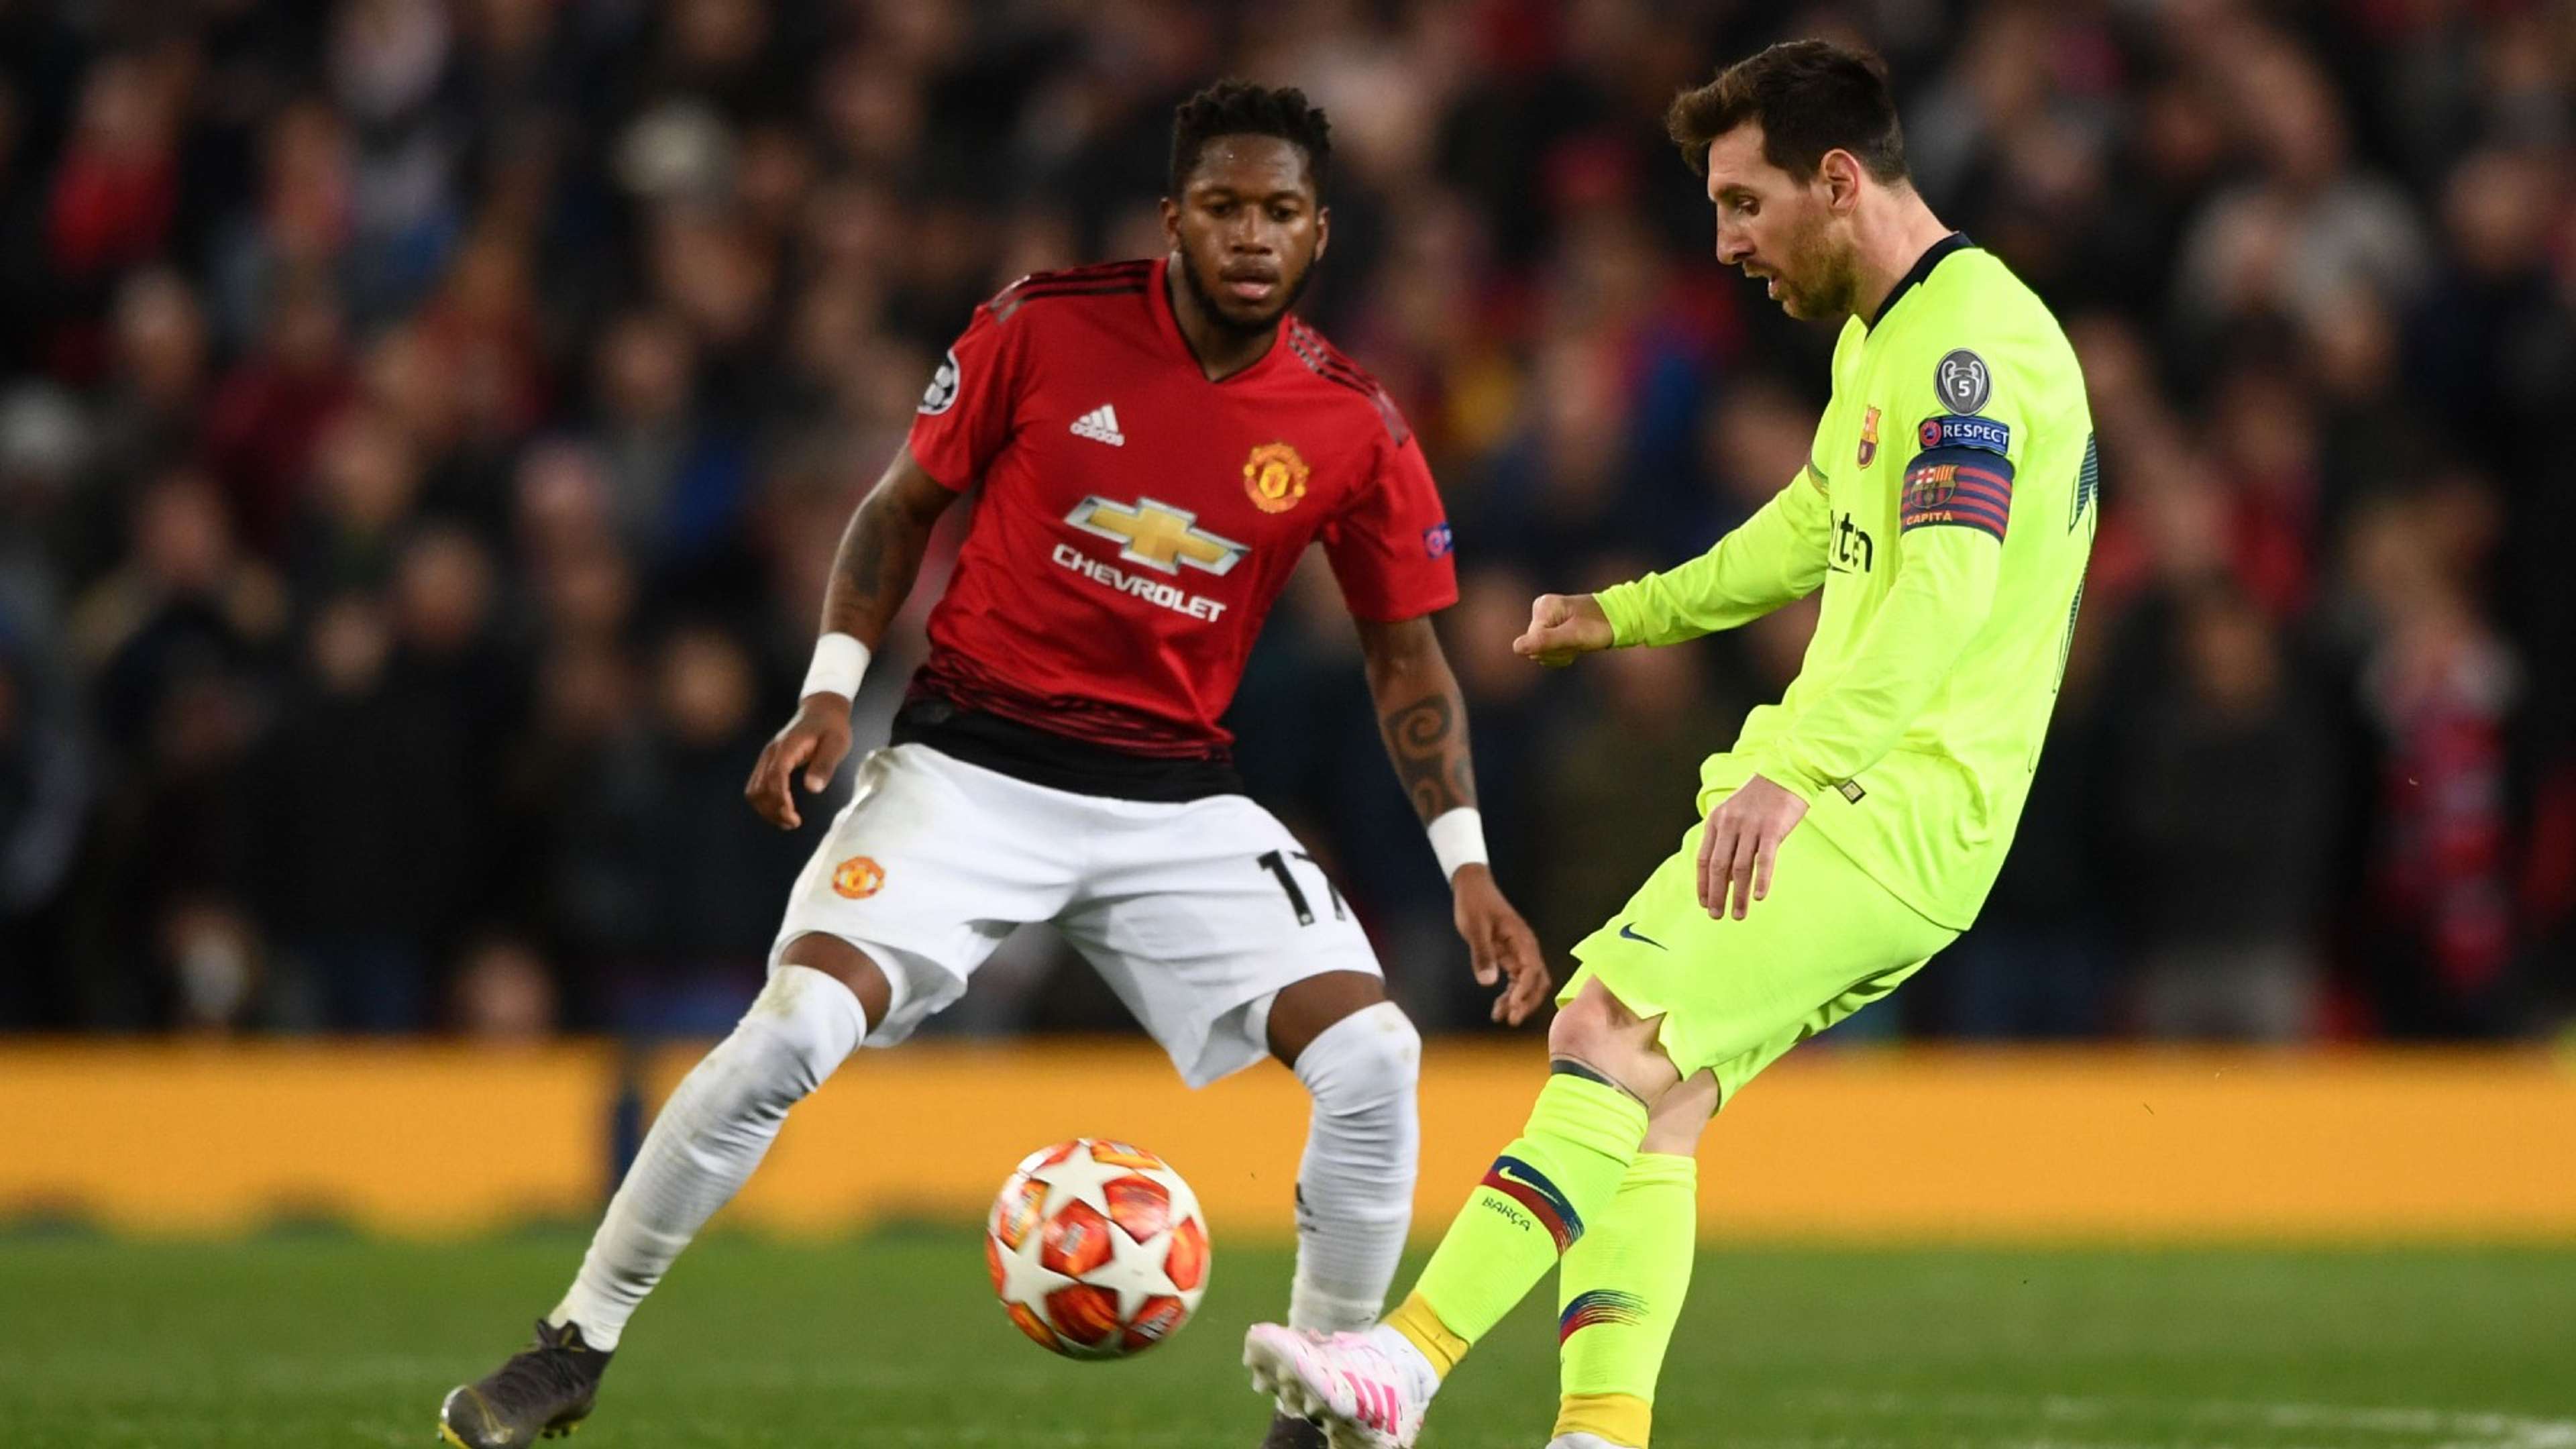 Fred Lionel Messi Manchester United Barcelona 2019